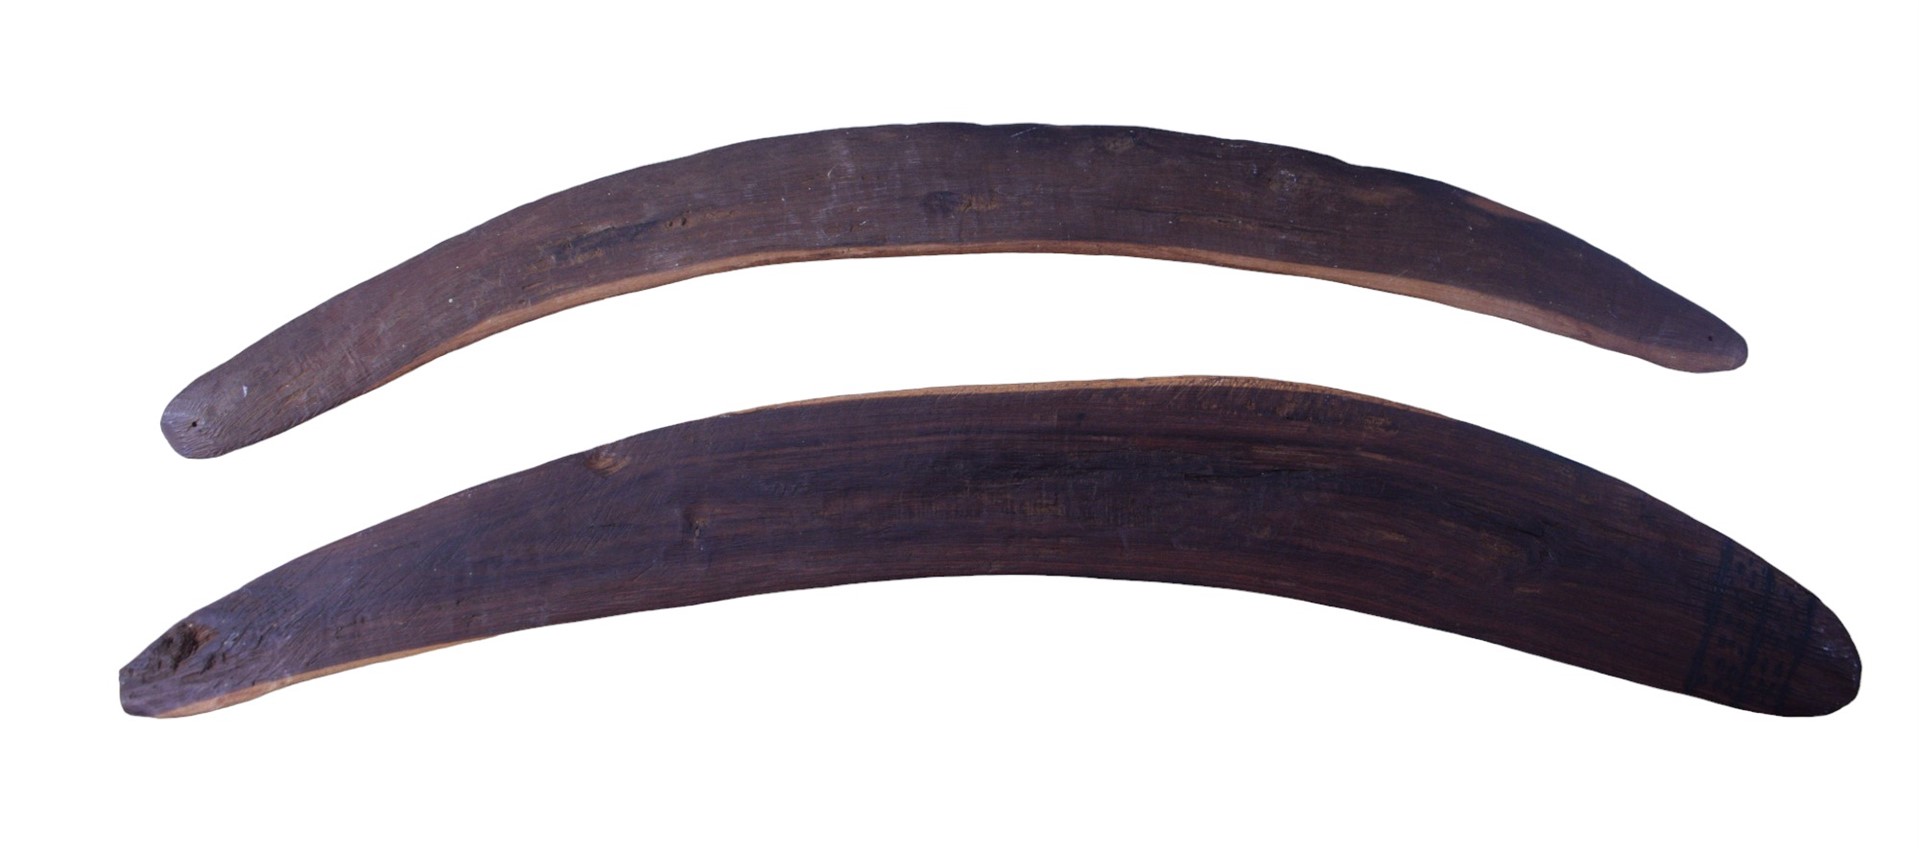 Two Australian aboriginal boomerangs, longest 72 cm - Image 3 of 3